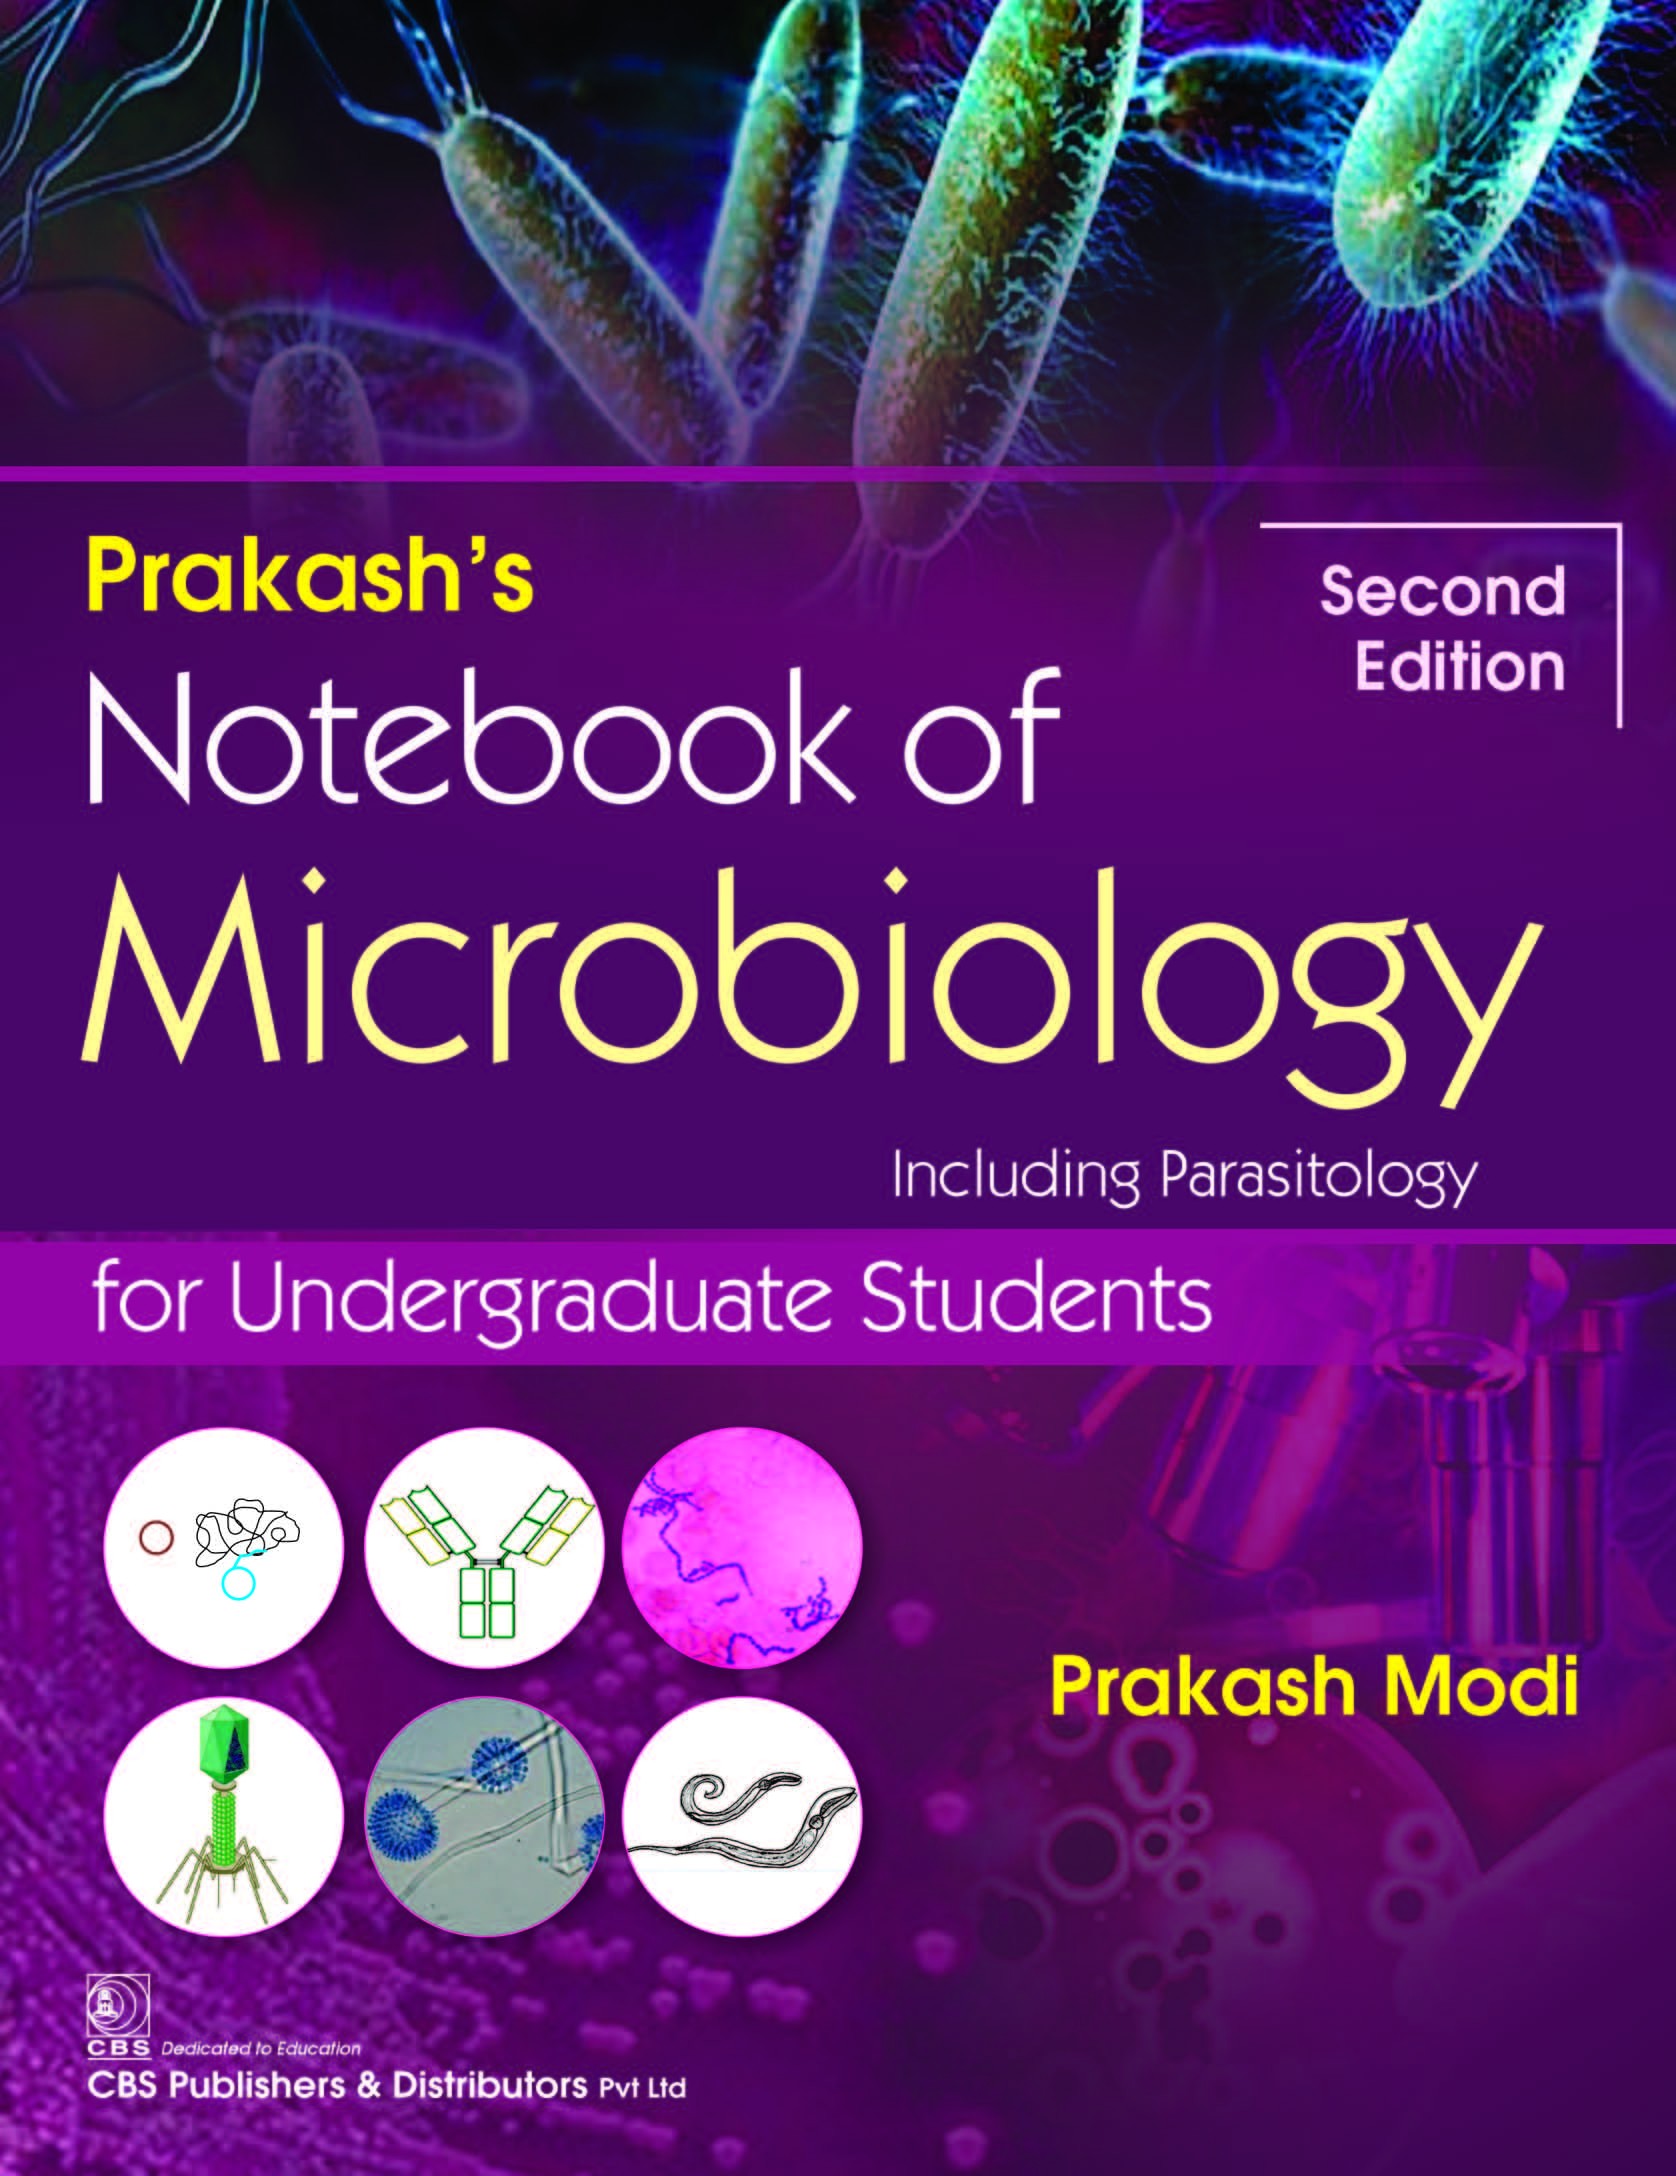 Prakash’s Notebook of Microbiology including Parasitology for Undergraduate Students, 2/e